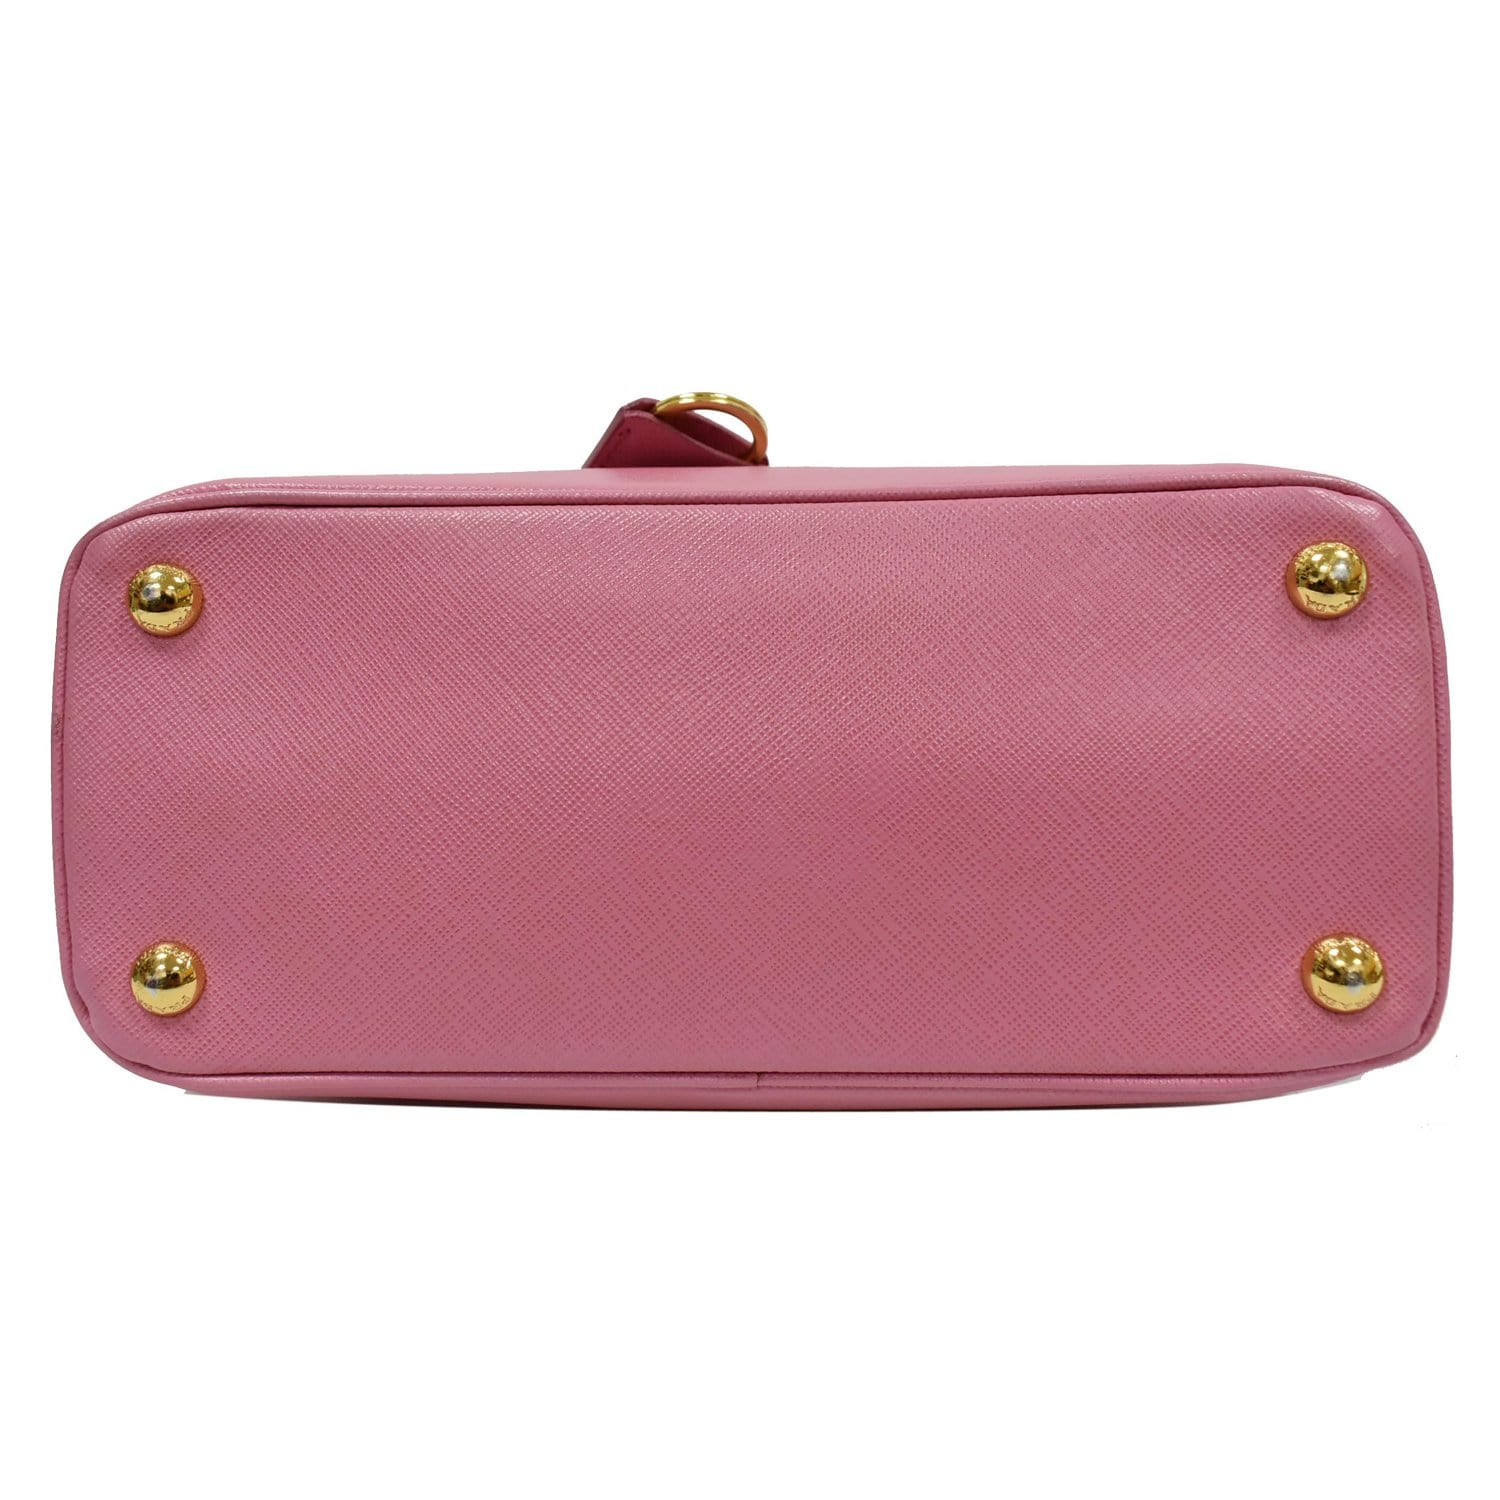 Prada Saffiano Leather Promenade Bag 1BA837 Pink Pony-style